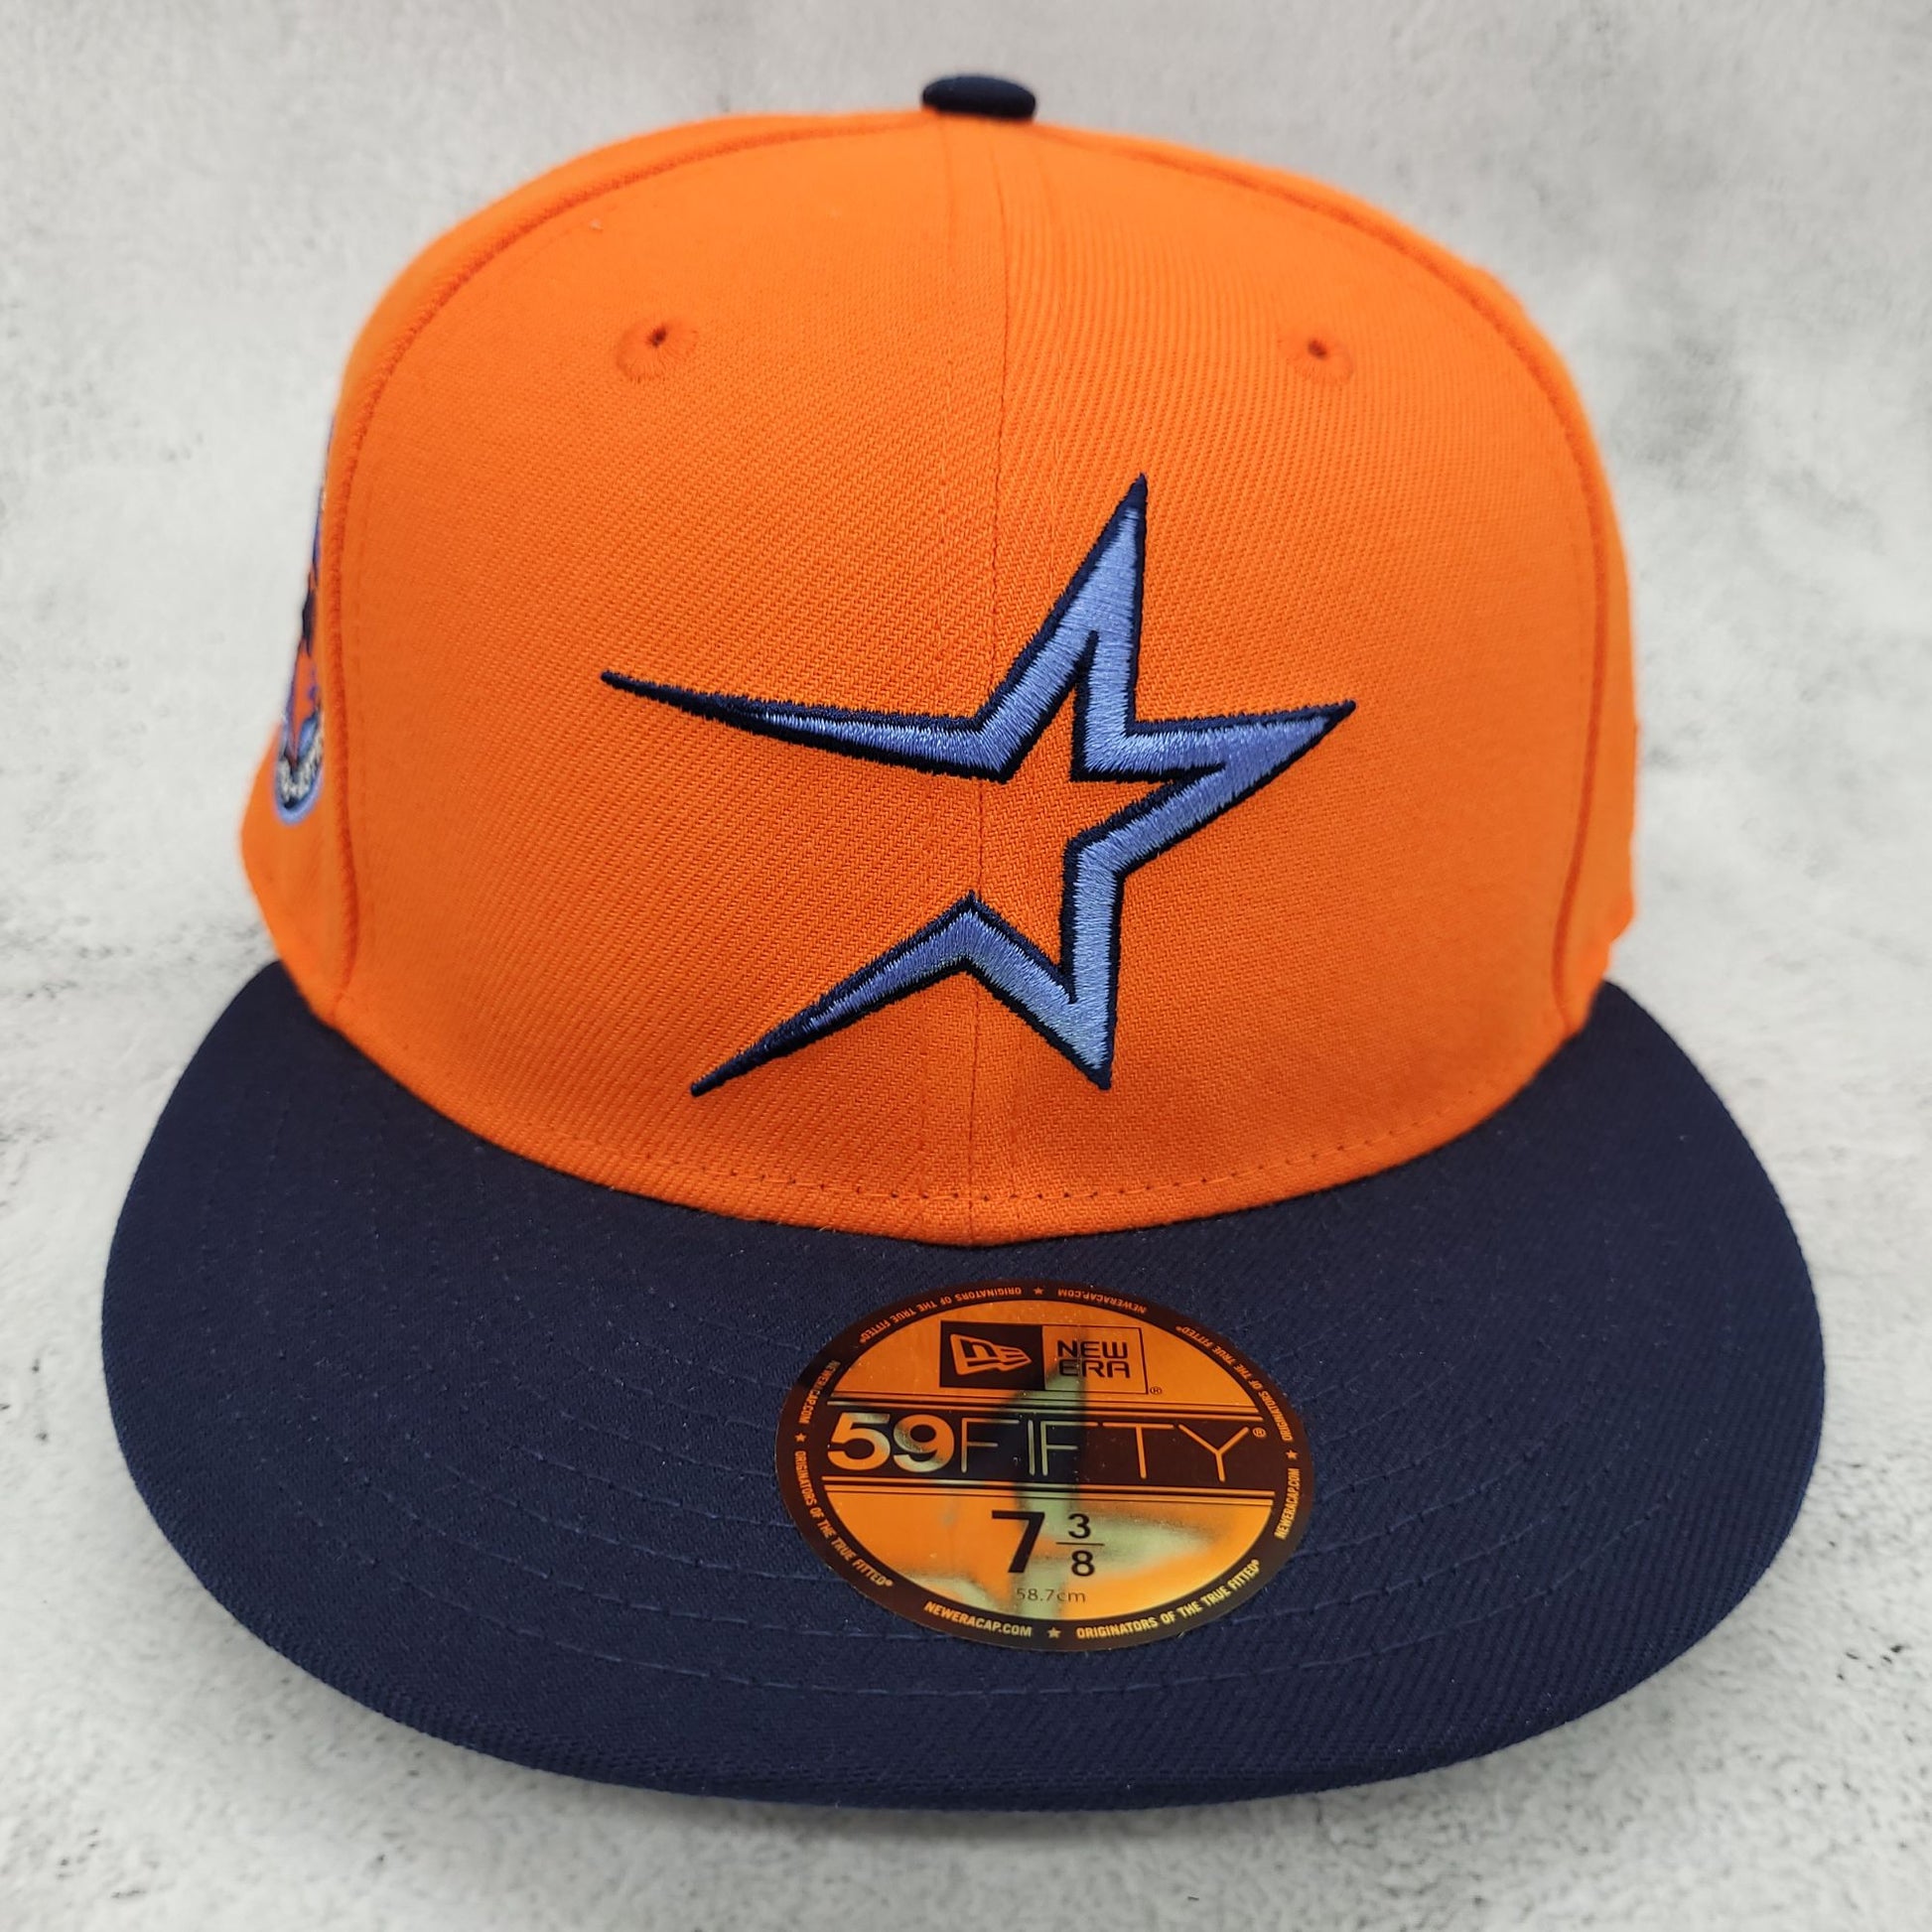 Houston Astros Colt .45s Cap Blue Orange Cooperstown Professional